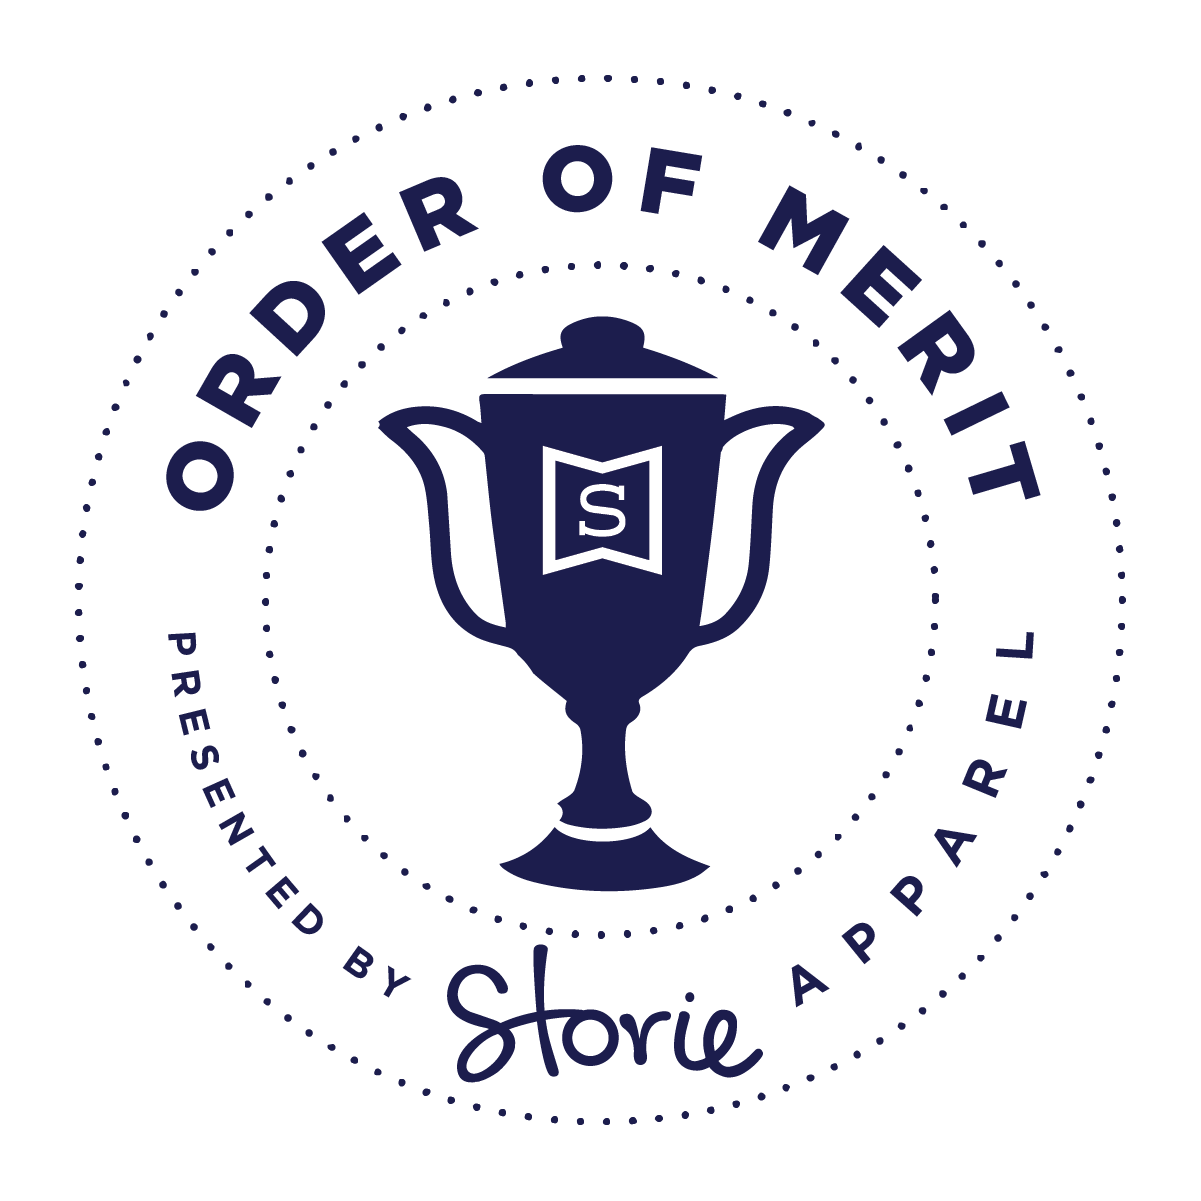 Storie Apparel Order of Merit Standings